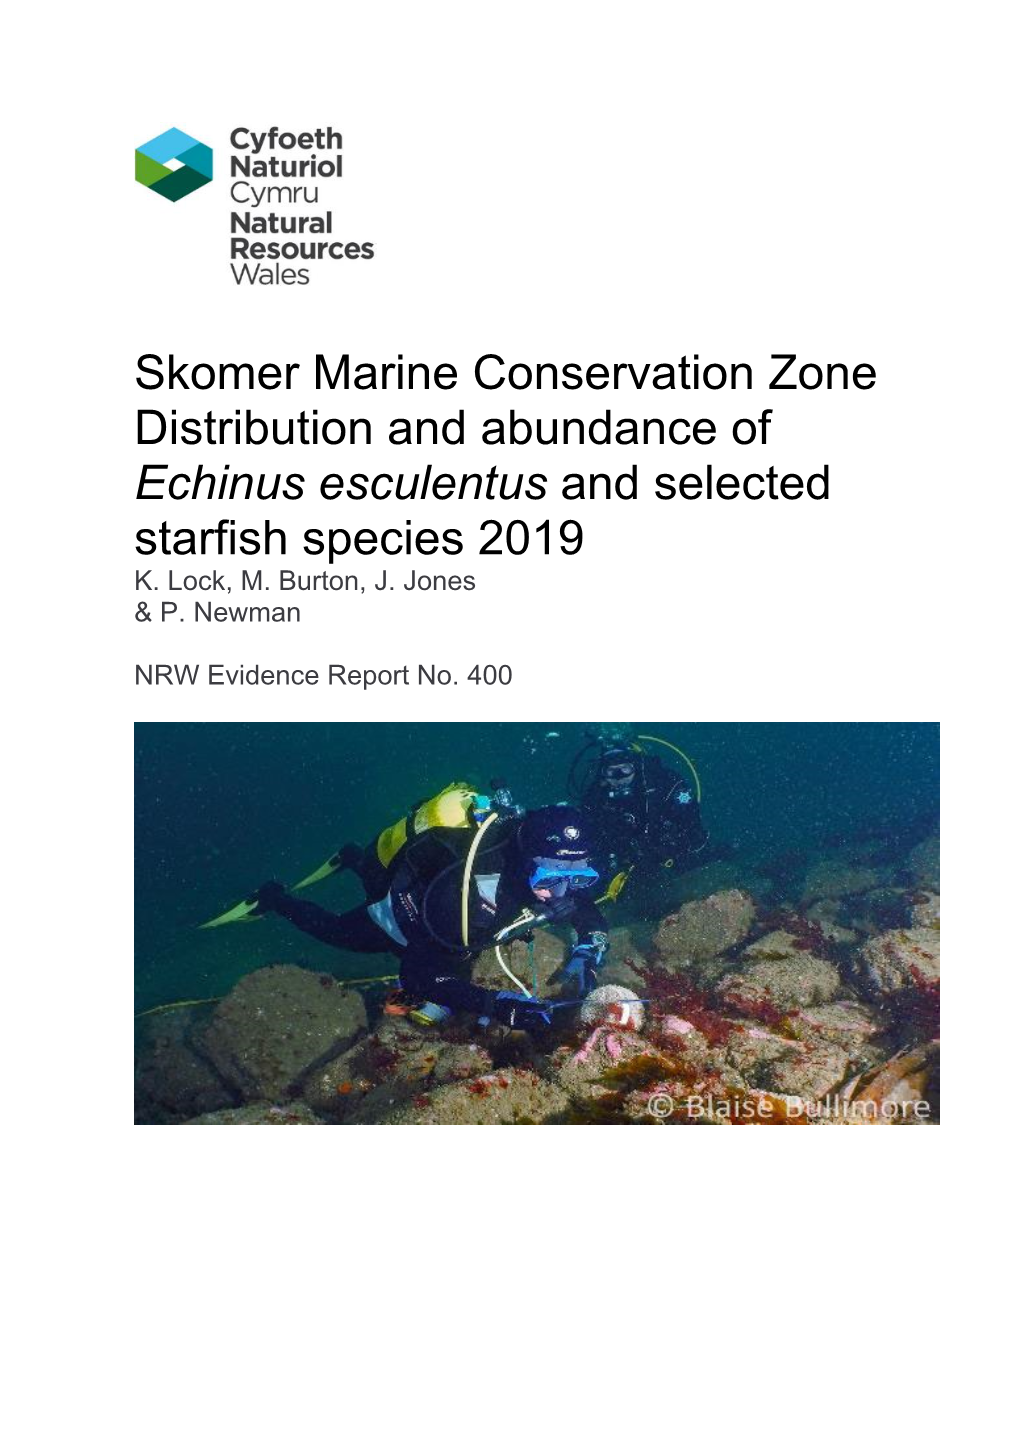 Skomer Marine Conservation Zone Distribution and Abundance of Echinus Esculentus and Selected Starfish Species 2019 K